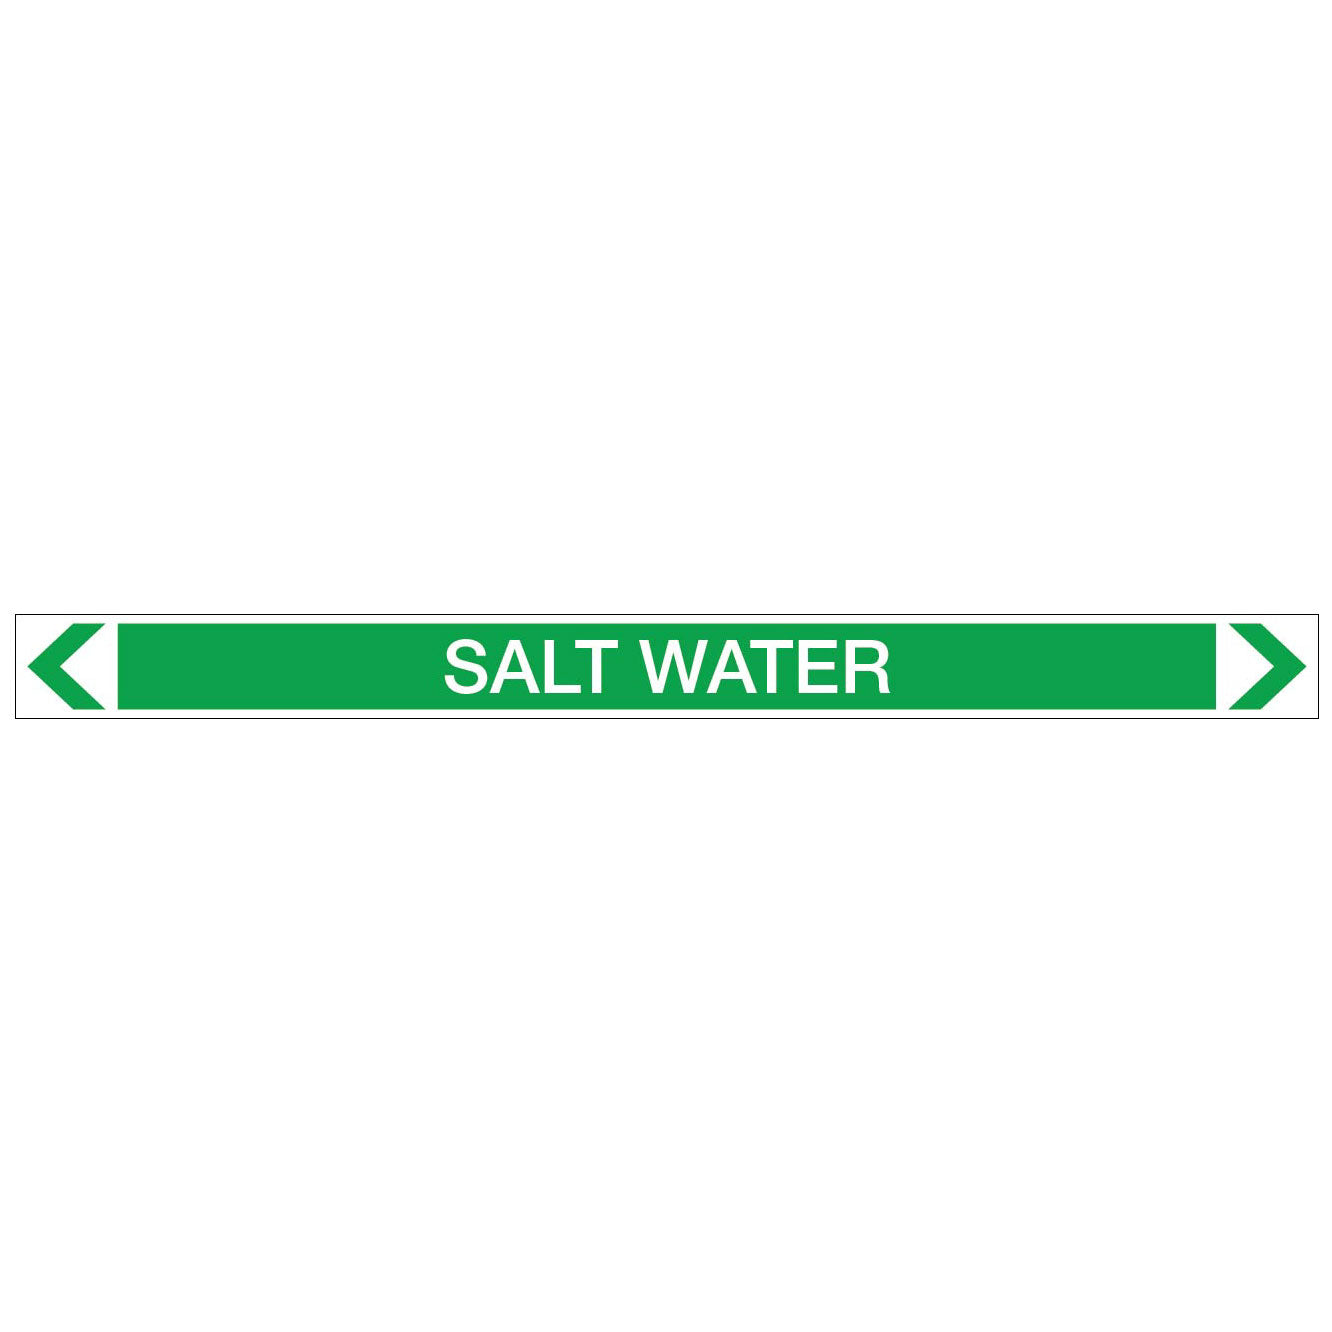 Water - Salt Water - Pipe Marker Sticker